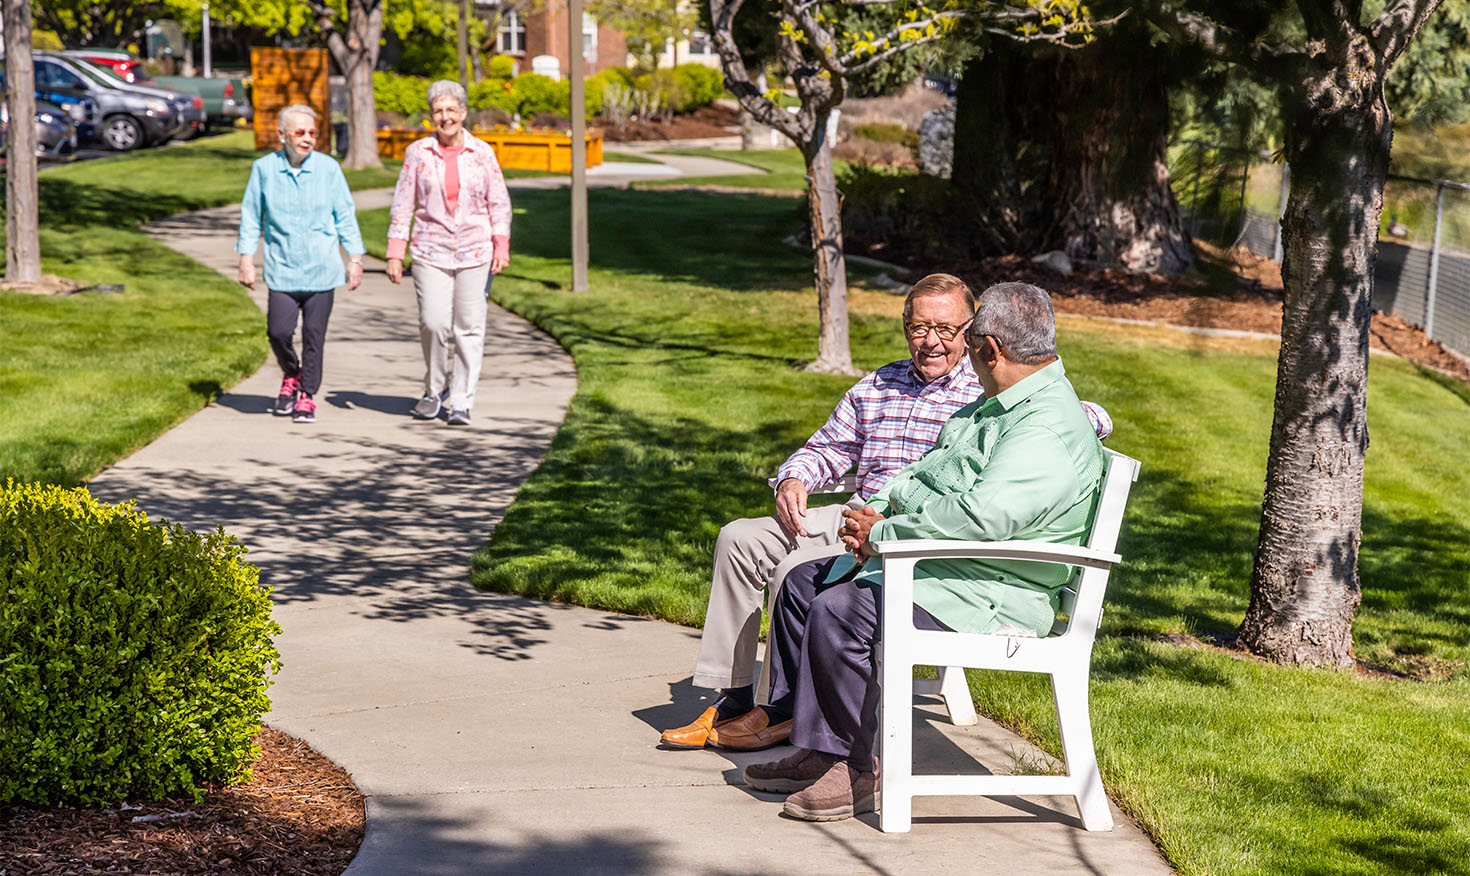 Two senior men sitting on a park bench and two senior women walking along the sidewalk